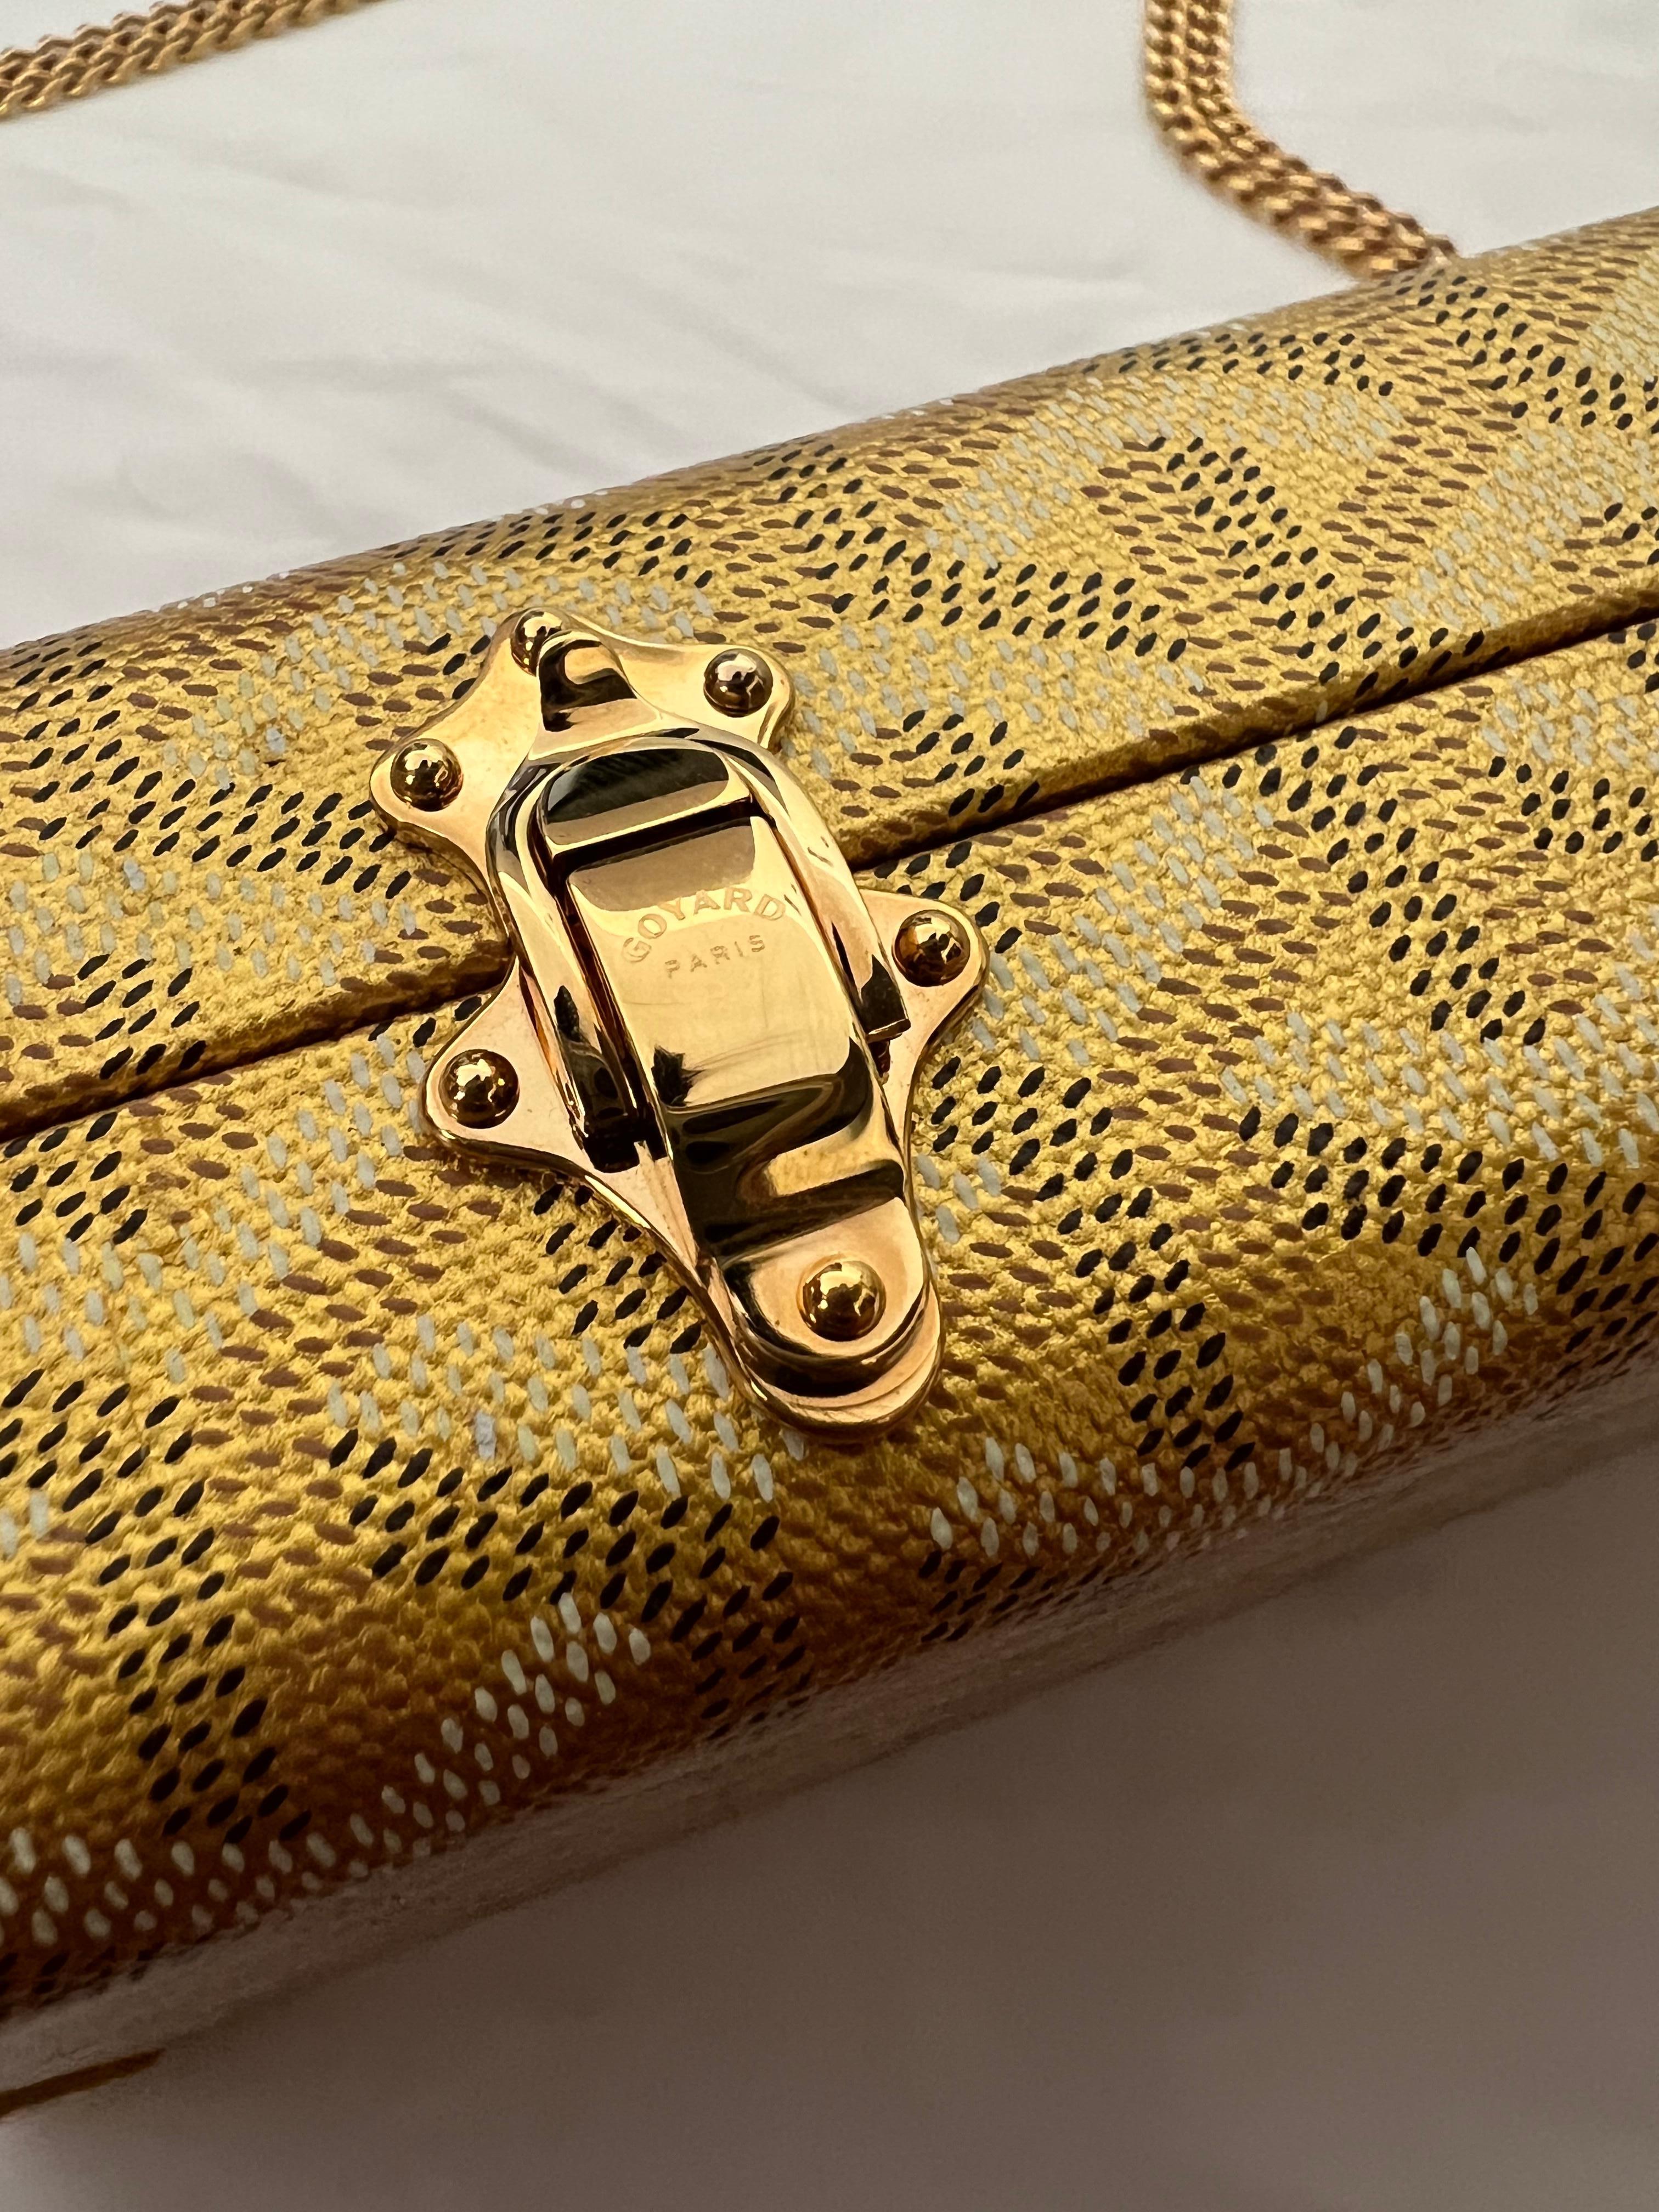 Goyard Saint Honore Trunk Shoulder Clutch Handbag In Excellent Condition For Sale In Beverly Hills, CA